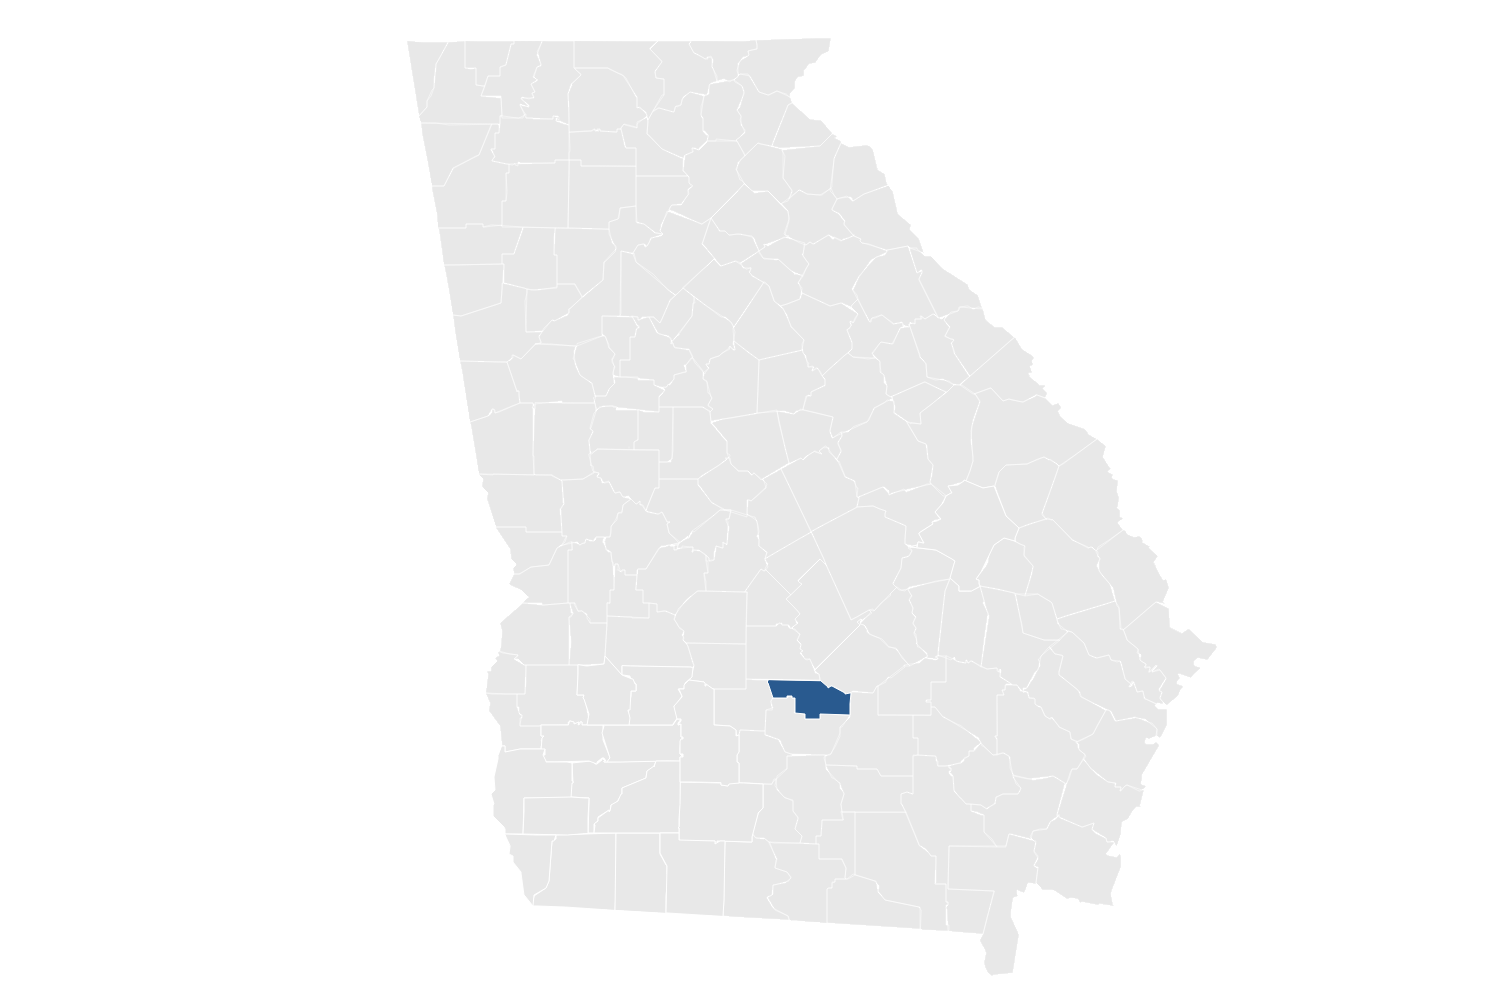 Ben Hill County Community Network in Georgia